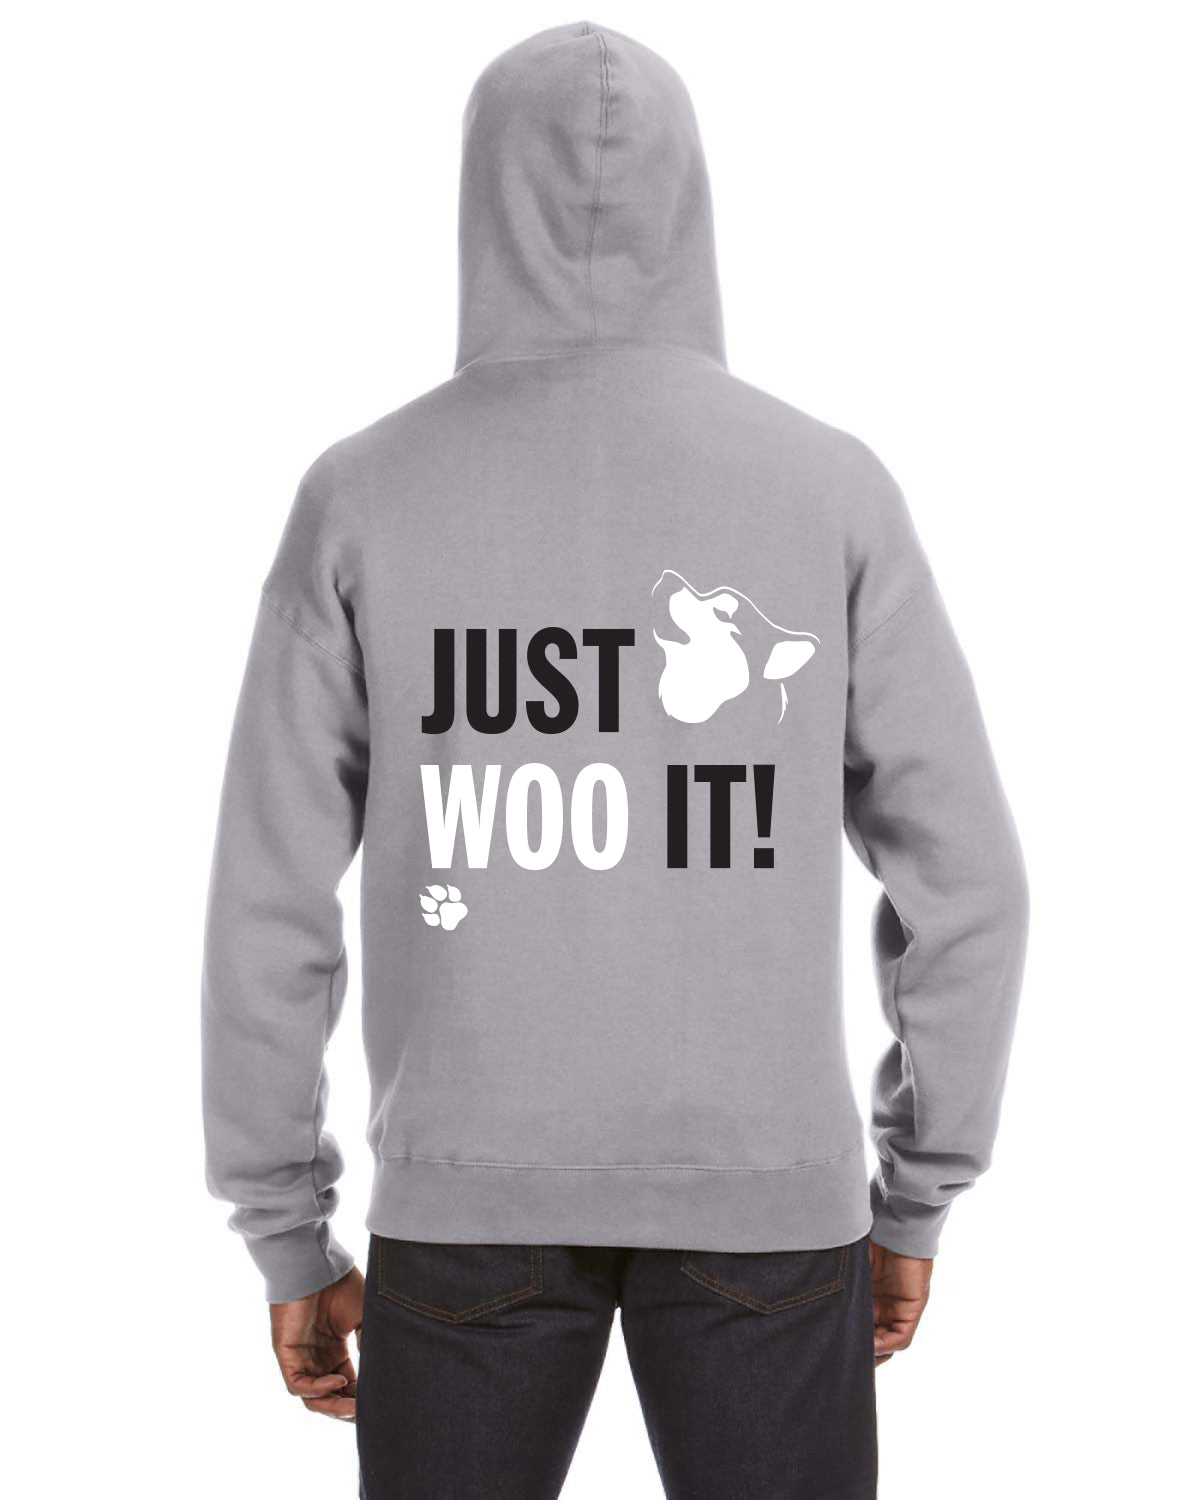 JUST WOO IT - Siberian Husky, Alaskan Malamute Zip Hooded Sweatshirt